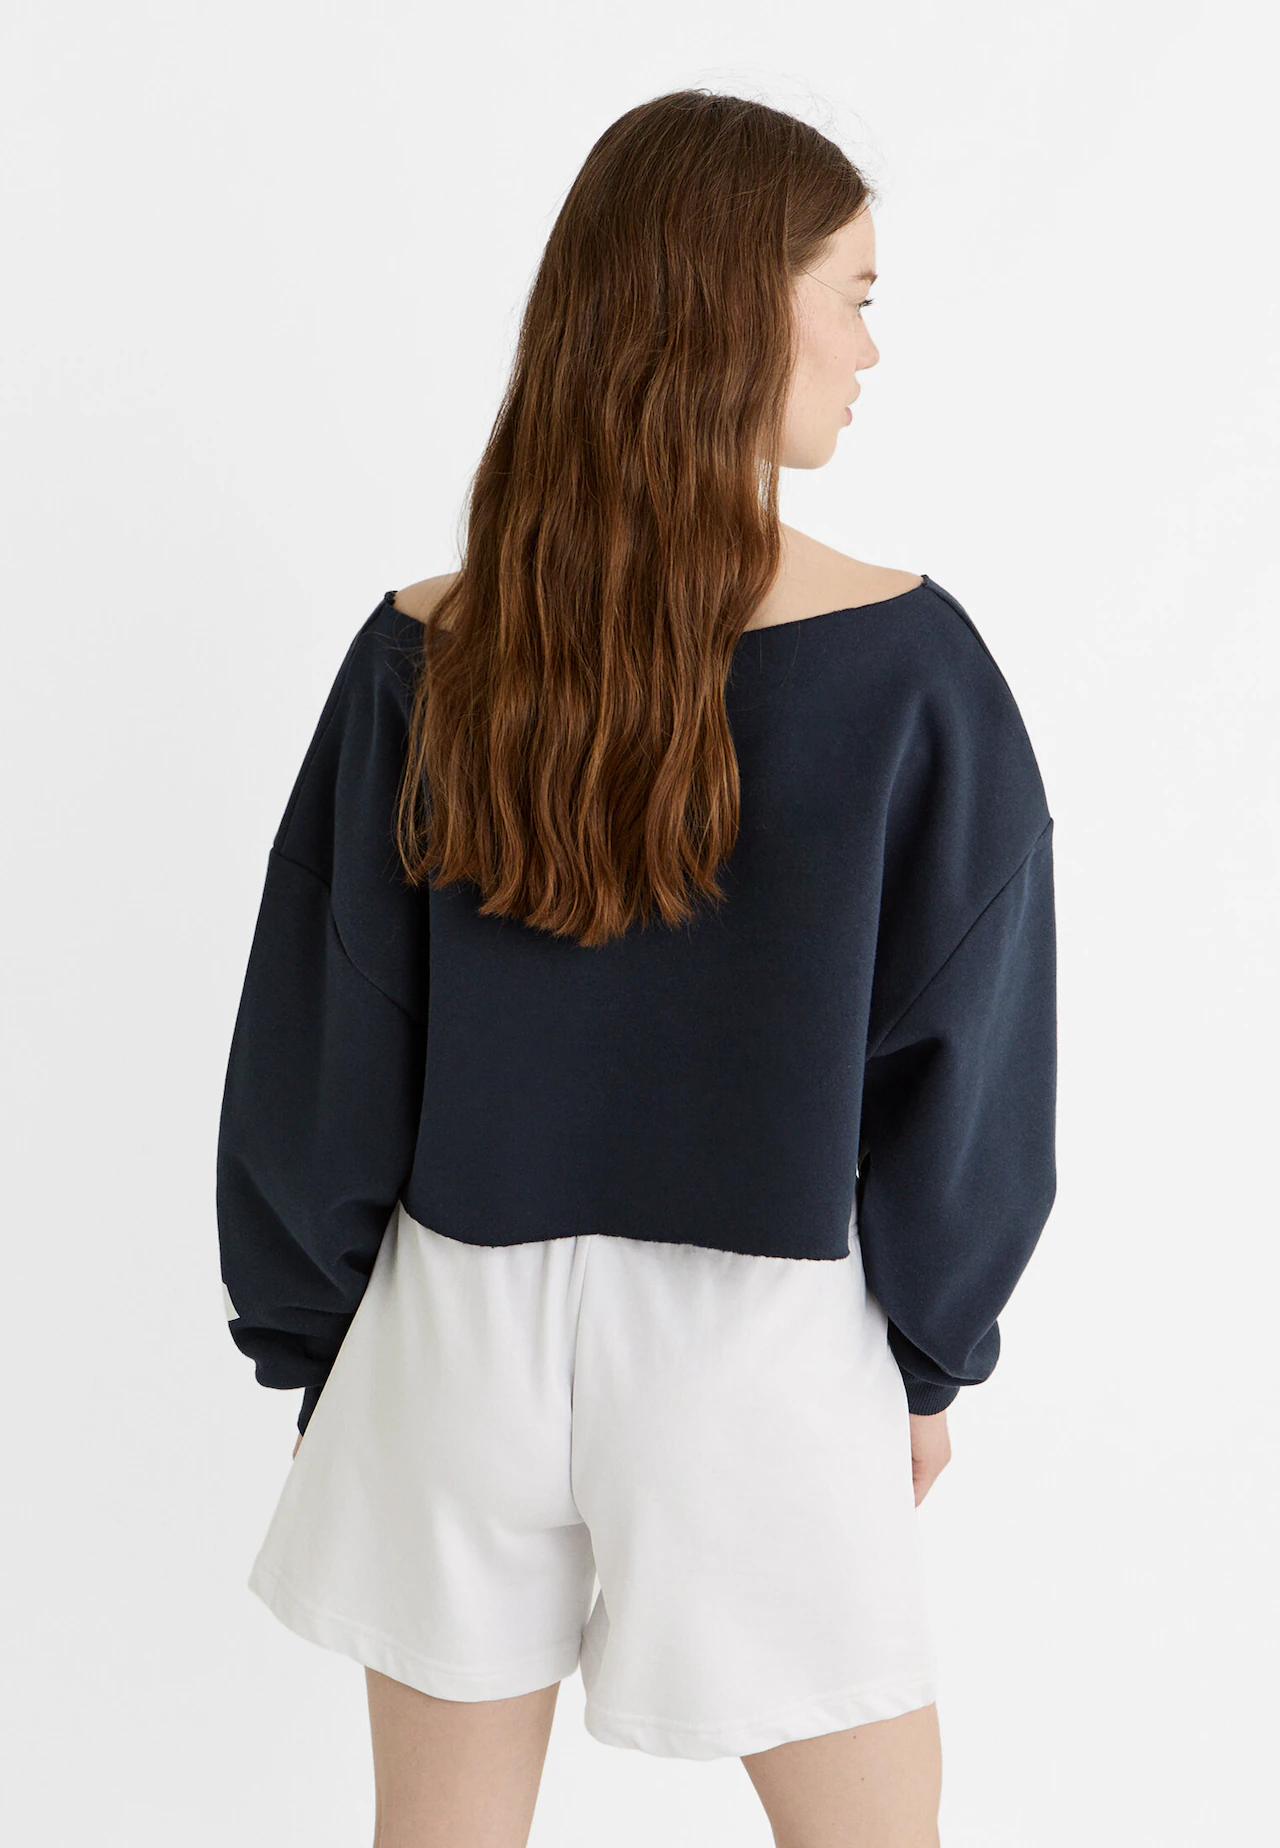 Boat neck cropped sweatshirt - Women's fashion